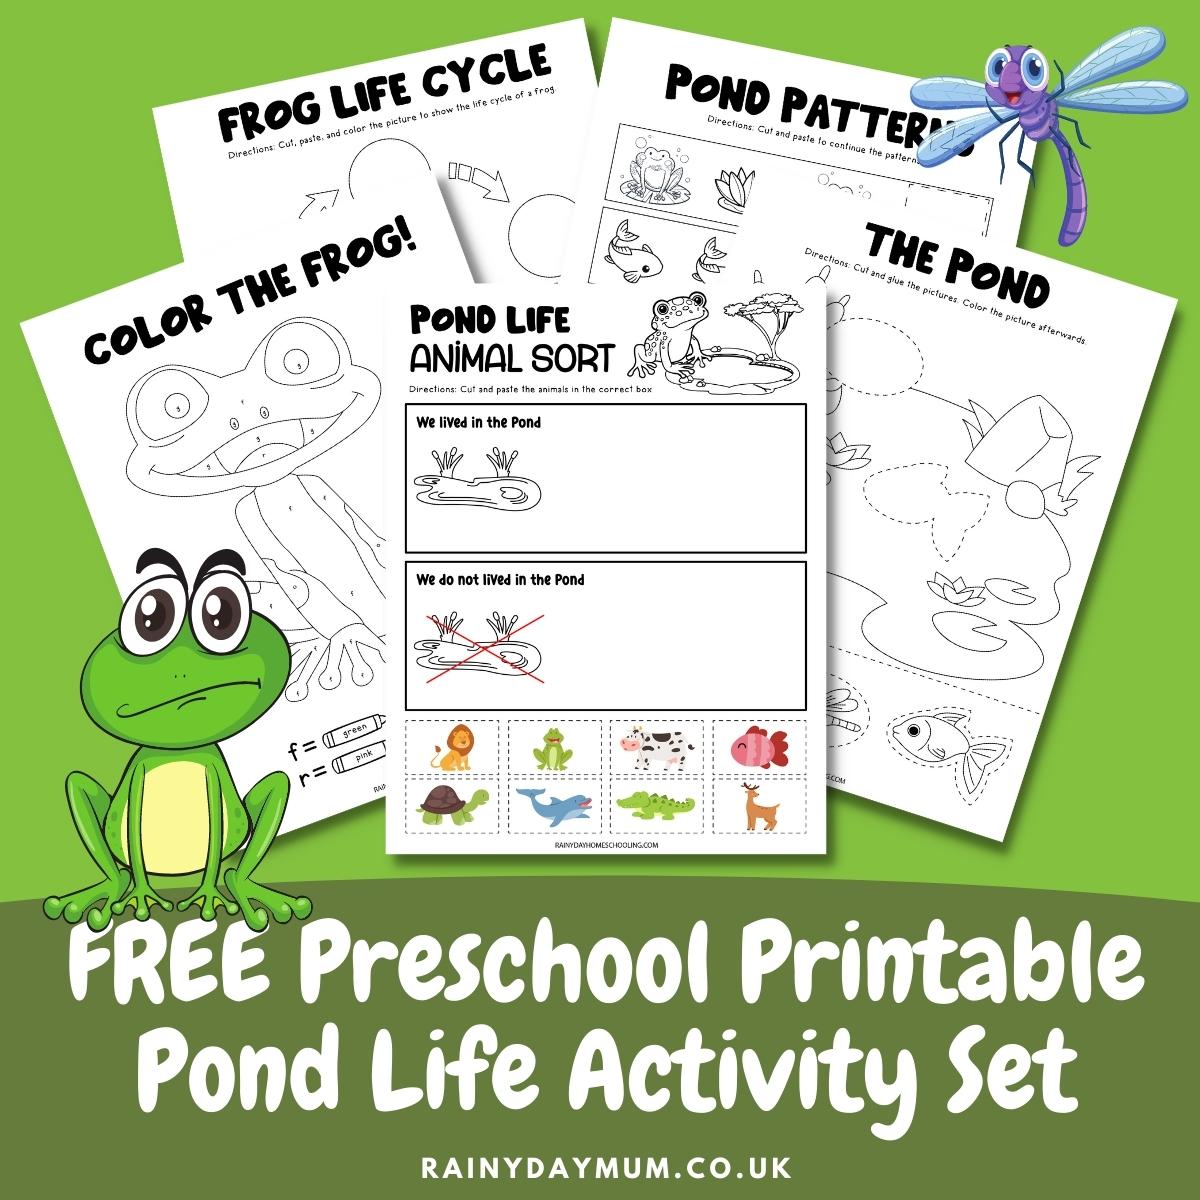 FREE Printable Preschool Pond Life Activity Pack